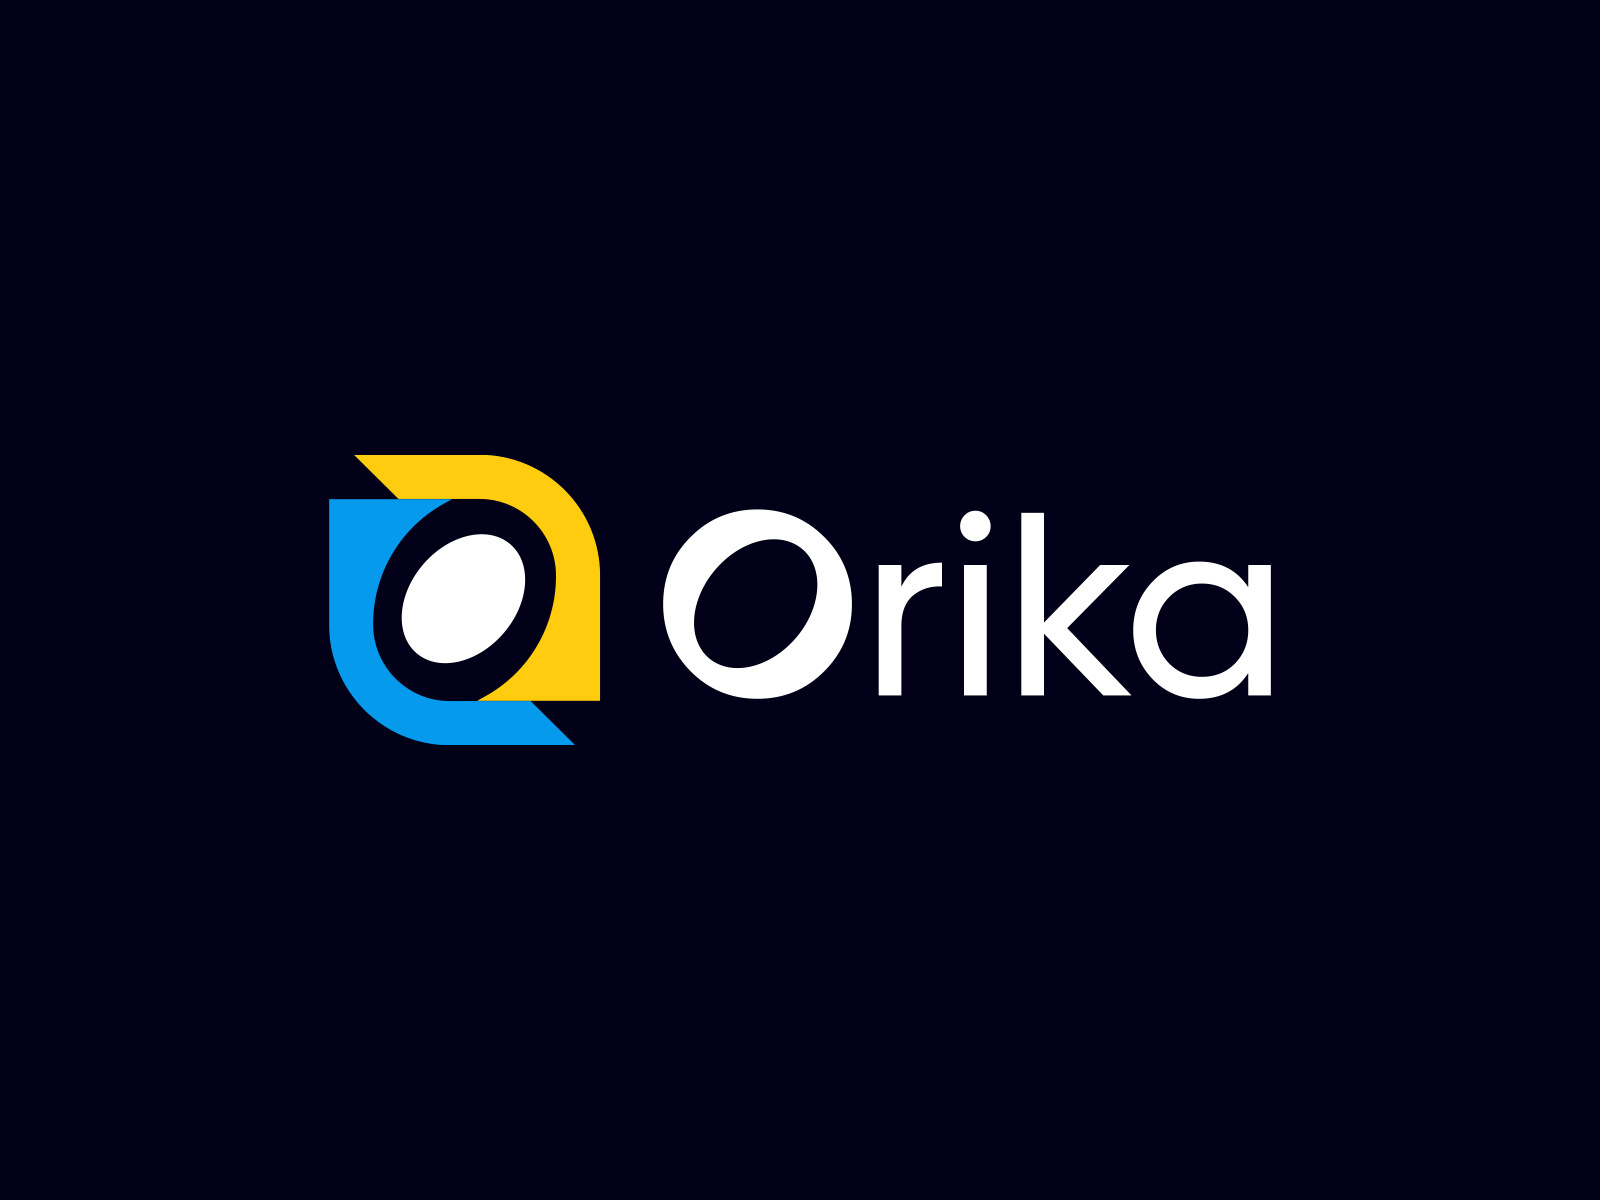 orika by Masud - Logo Designer for Oniex™ on Dribbble